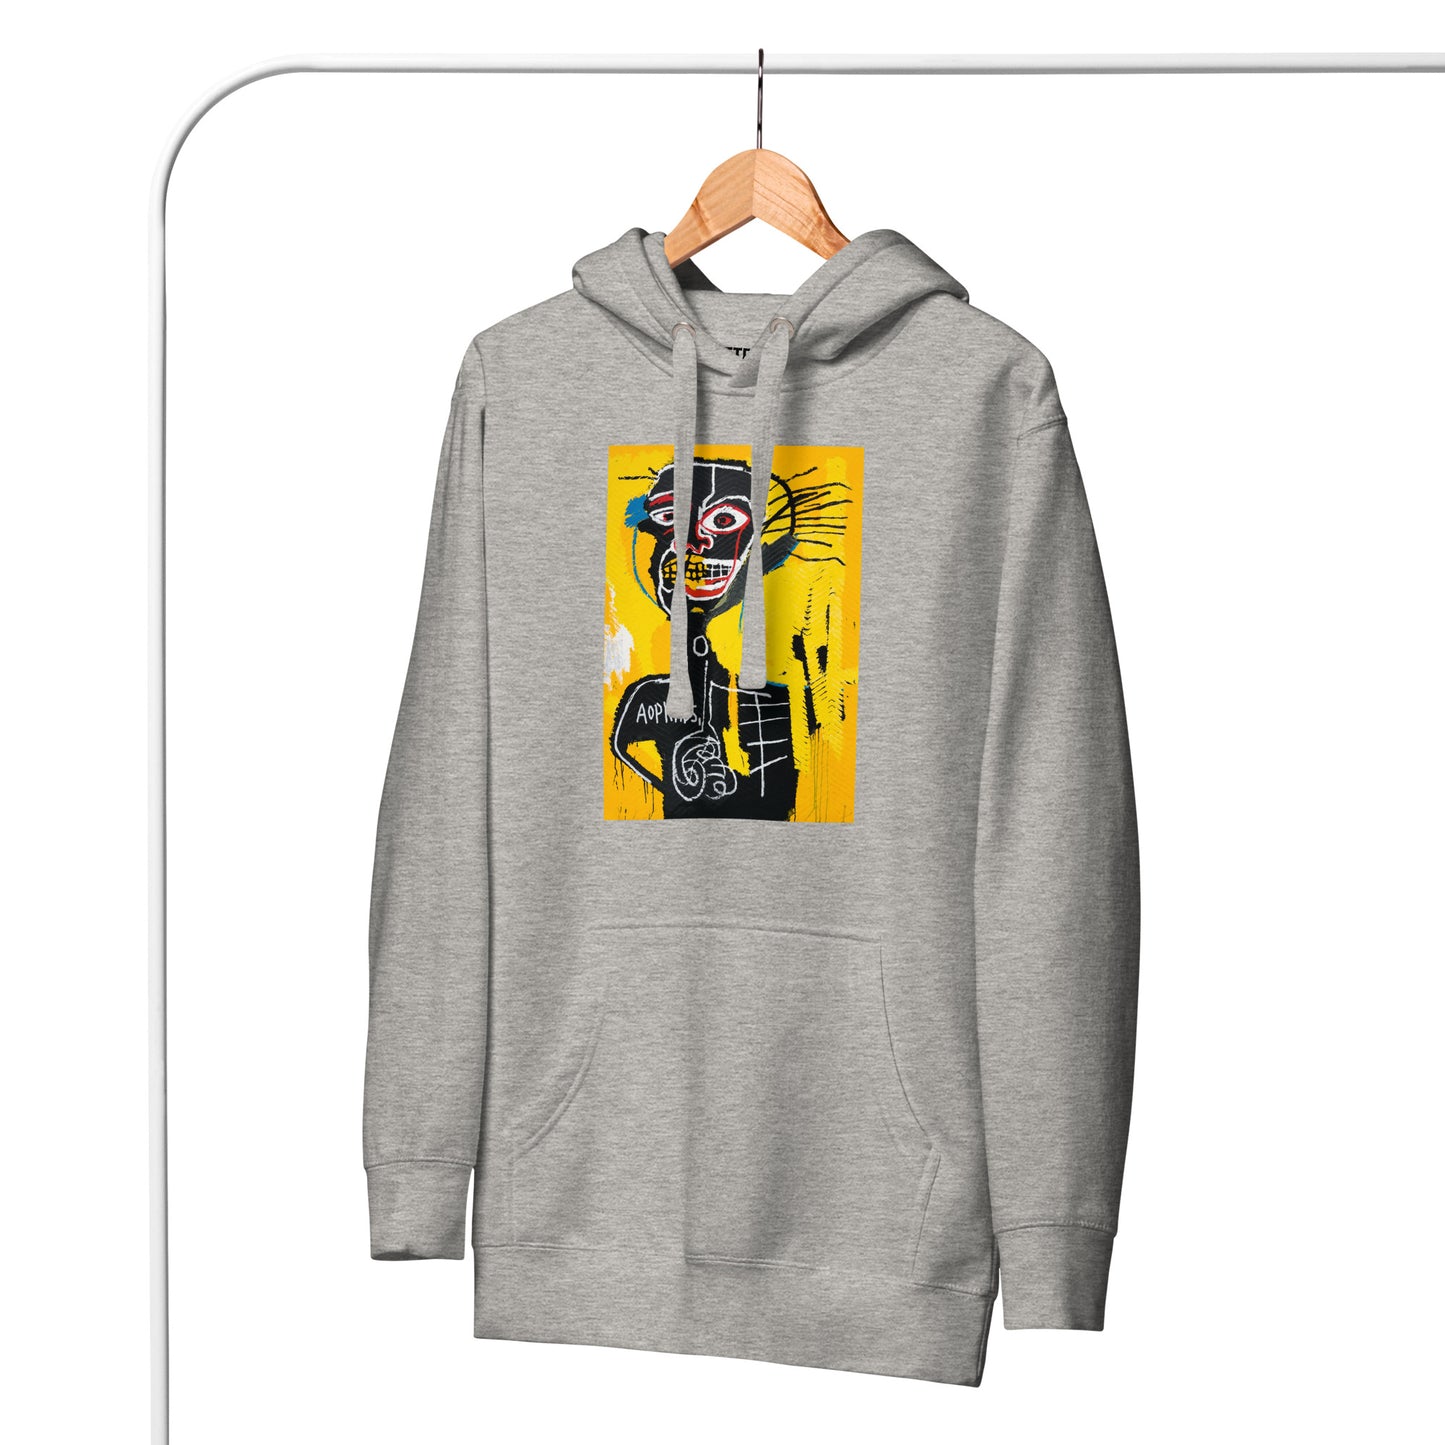 Jean-Michel Basquiat "Cabeza" Artwork Printed Premium Streetwear Sweatshirt Hoodie Grey